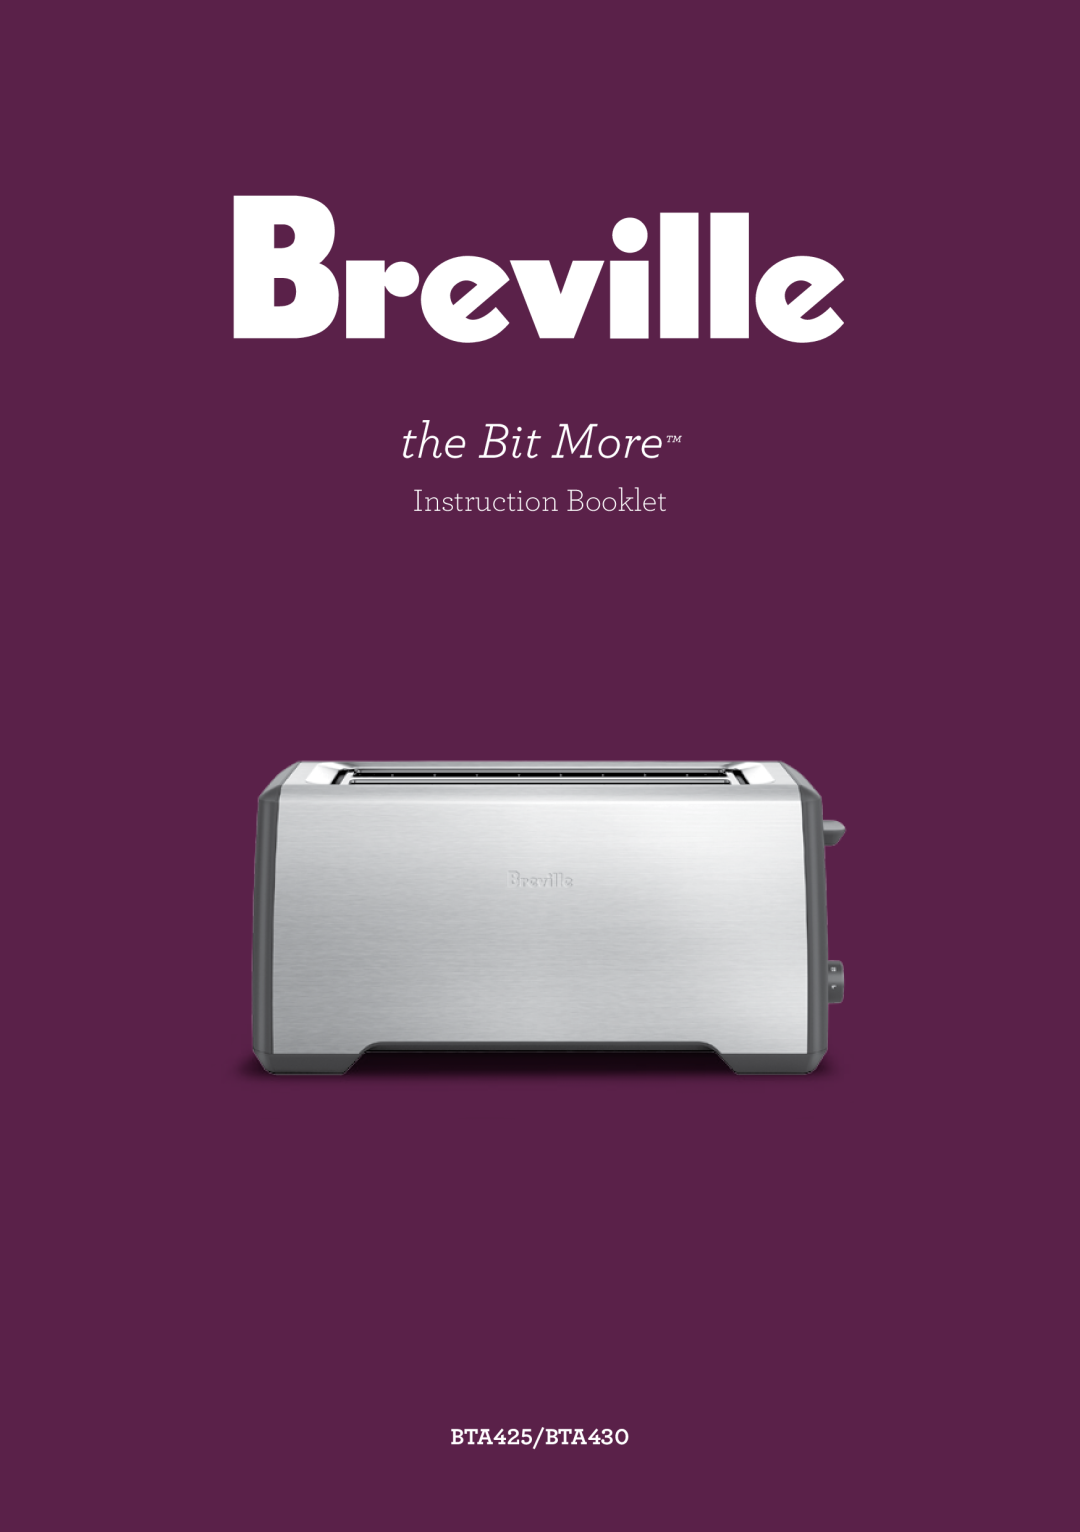 Breville brochure the Bit More, Instruction Booklet, BTA425/BTA430 